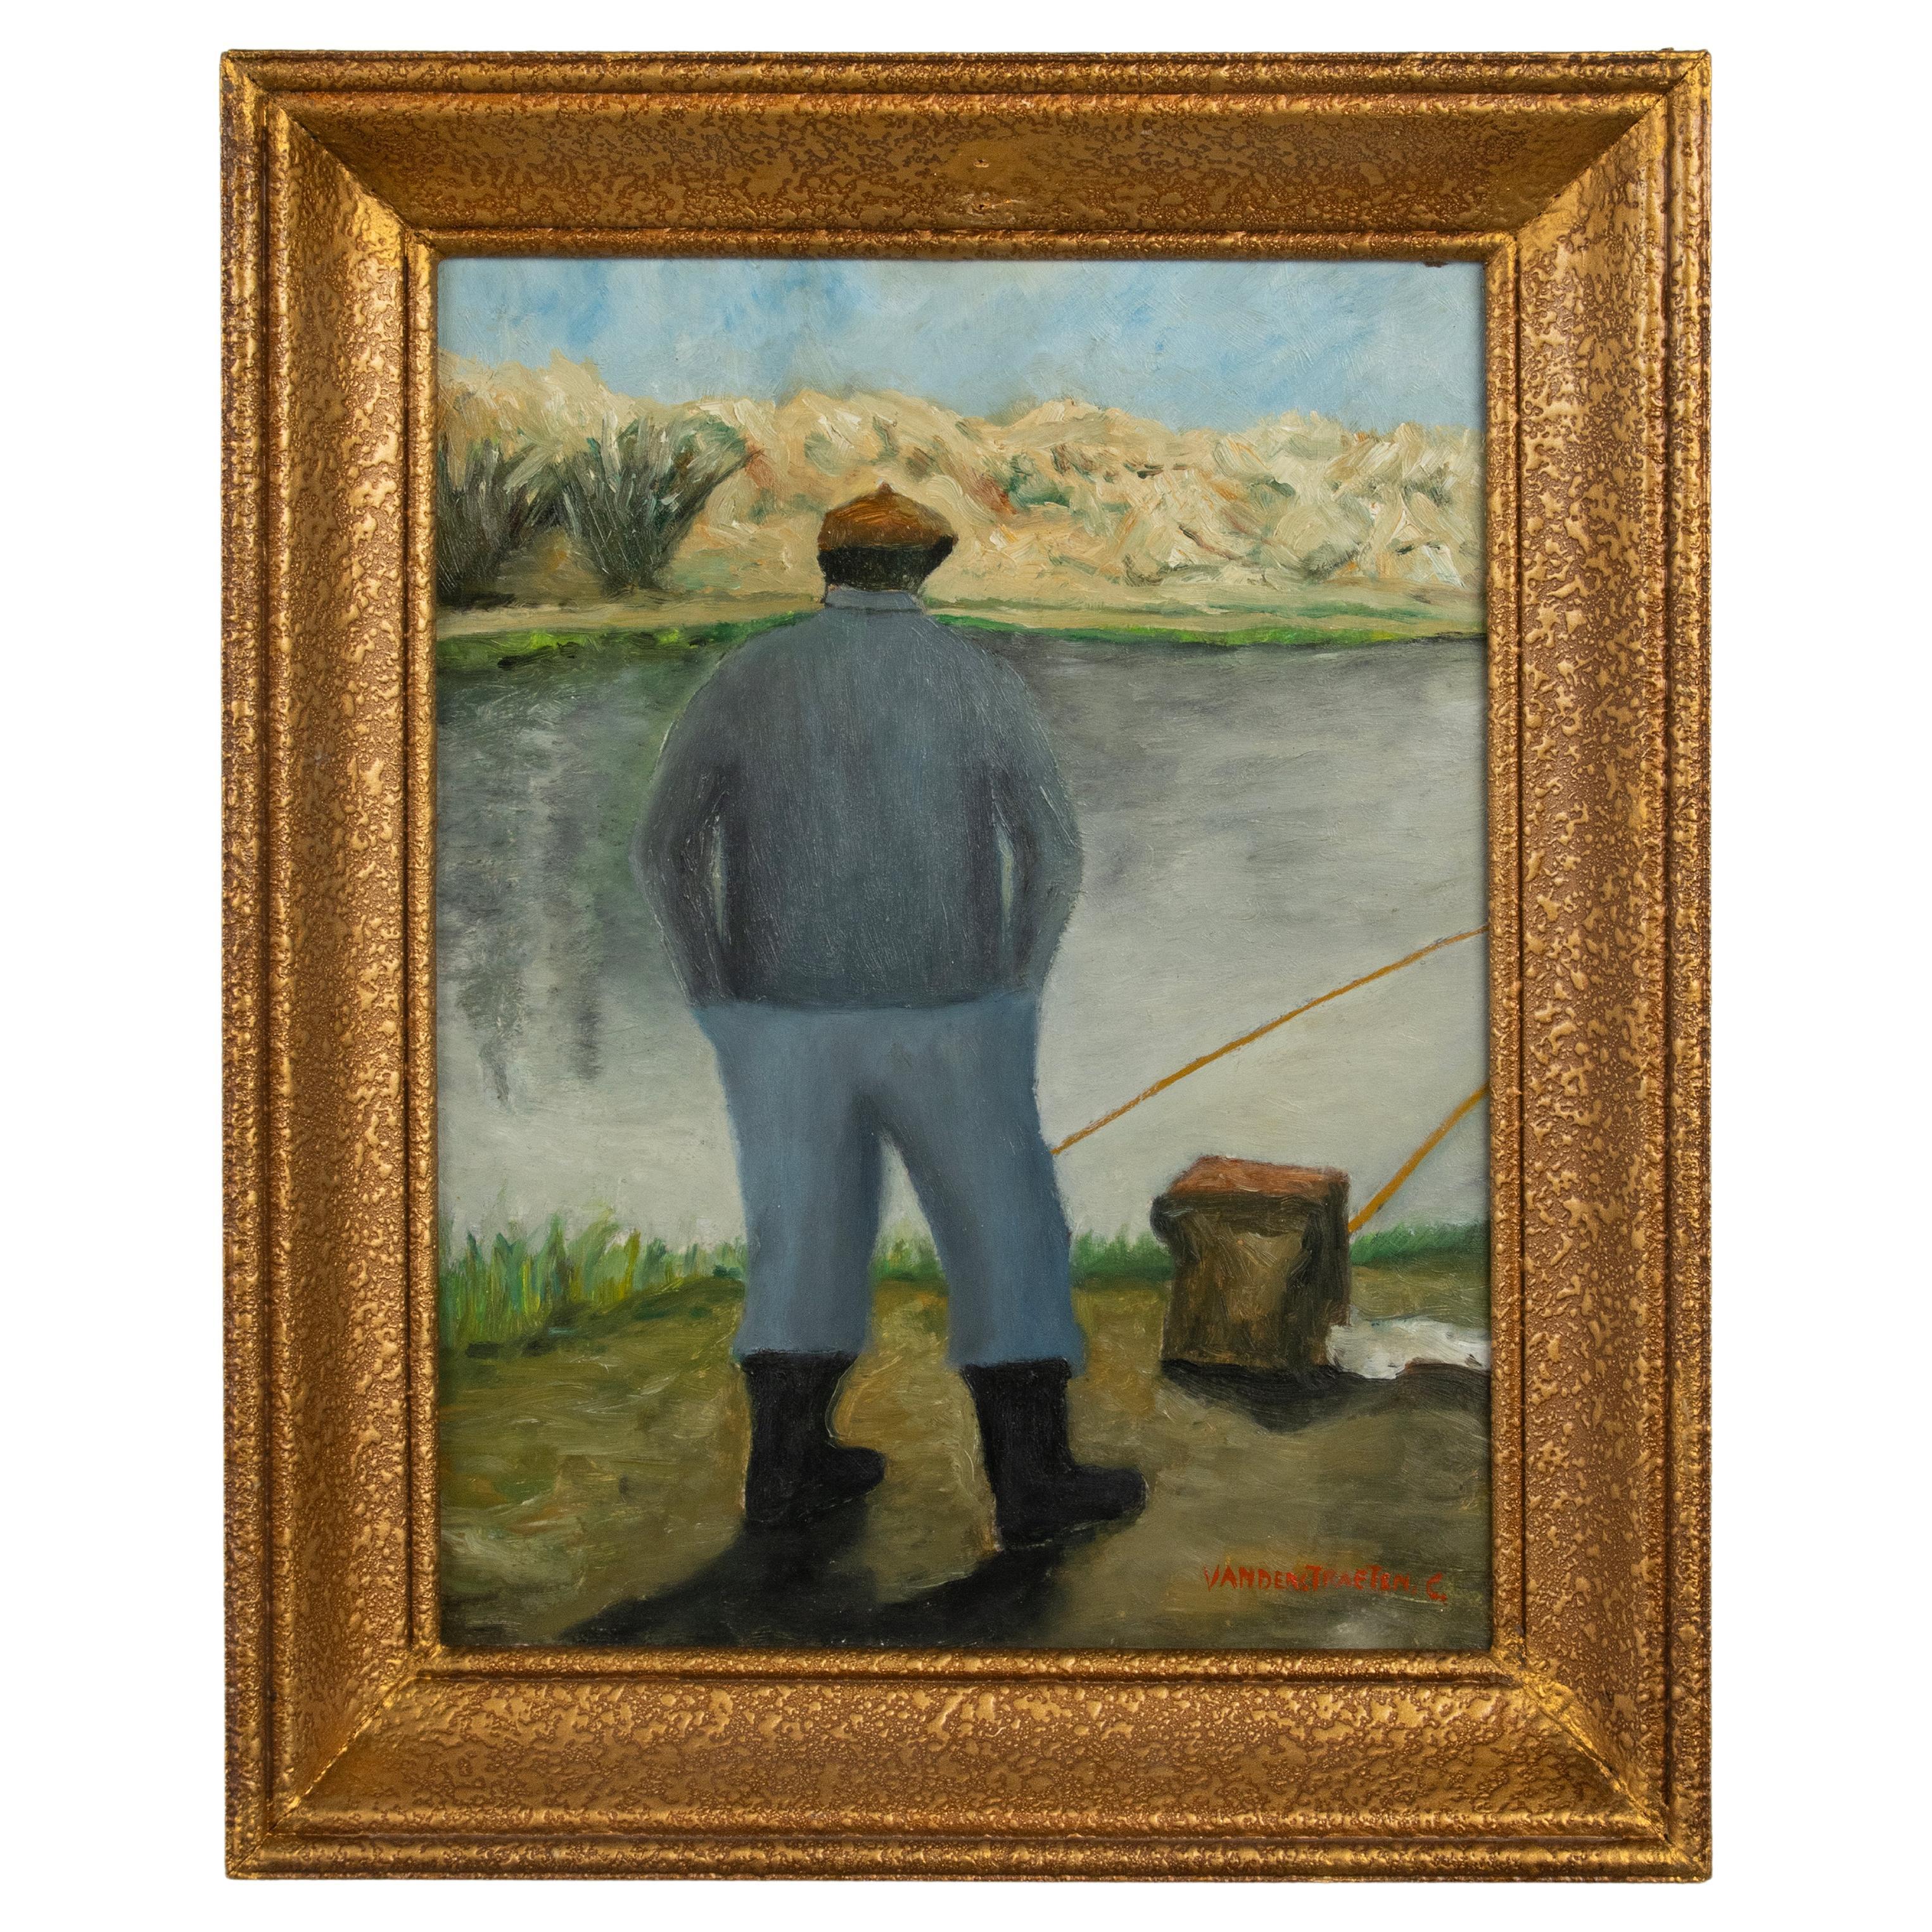 Mid 20th Century Oil Painting - Fisherman on the River - C. Vanderstraeten For Sale